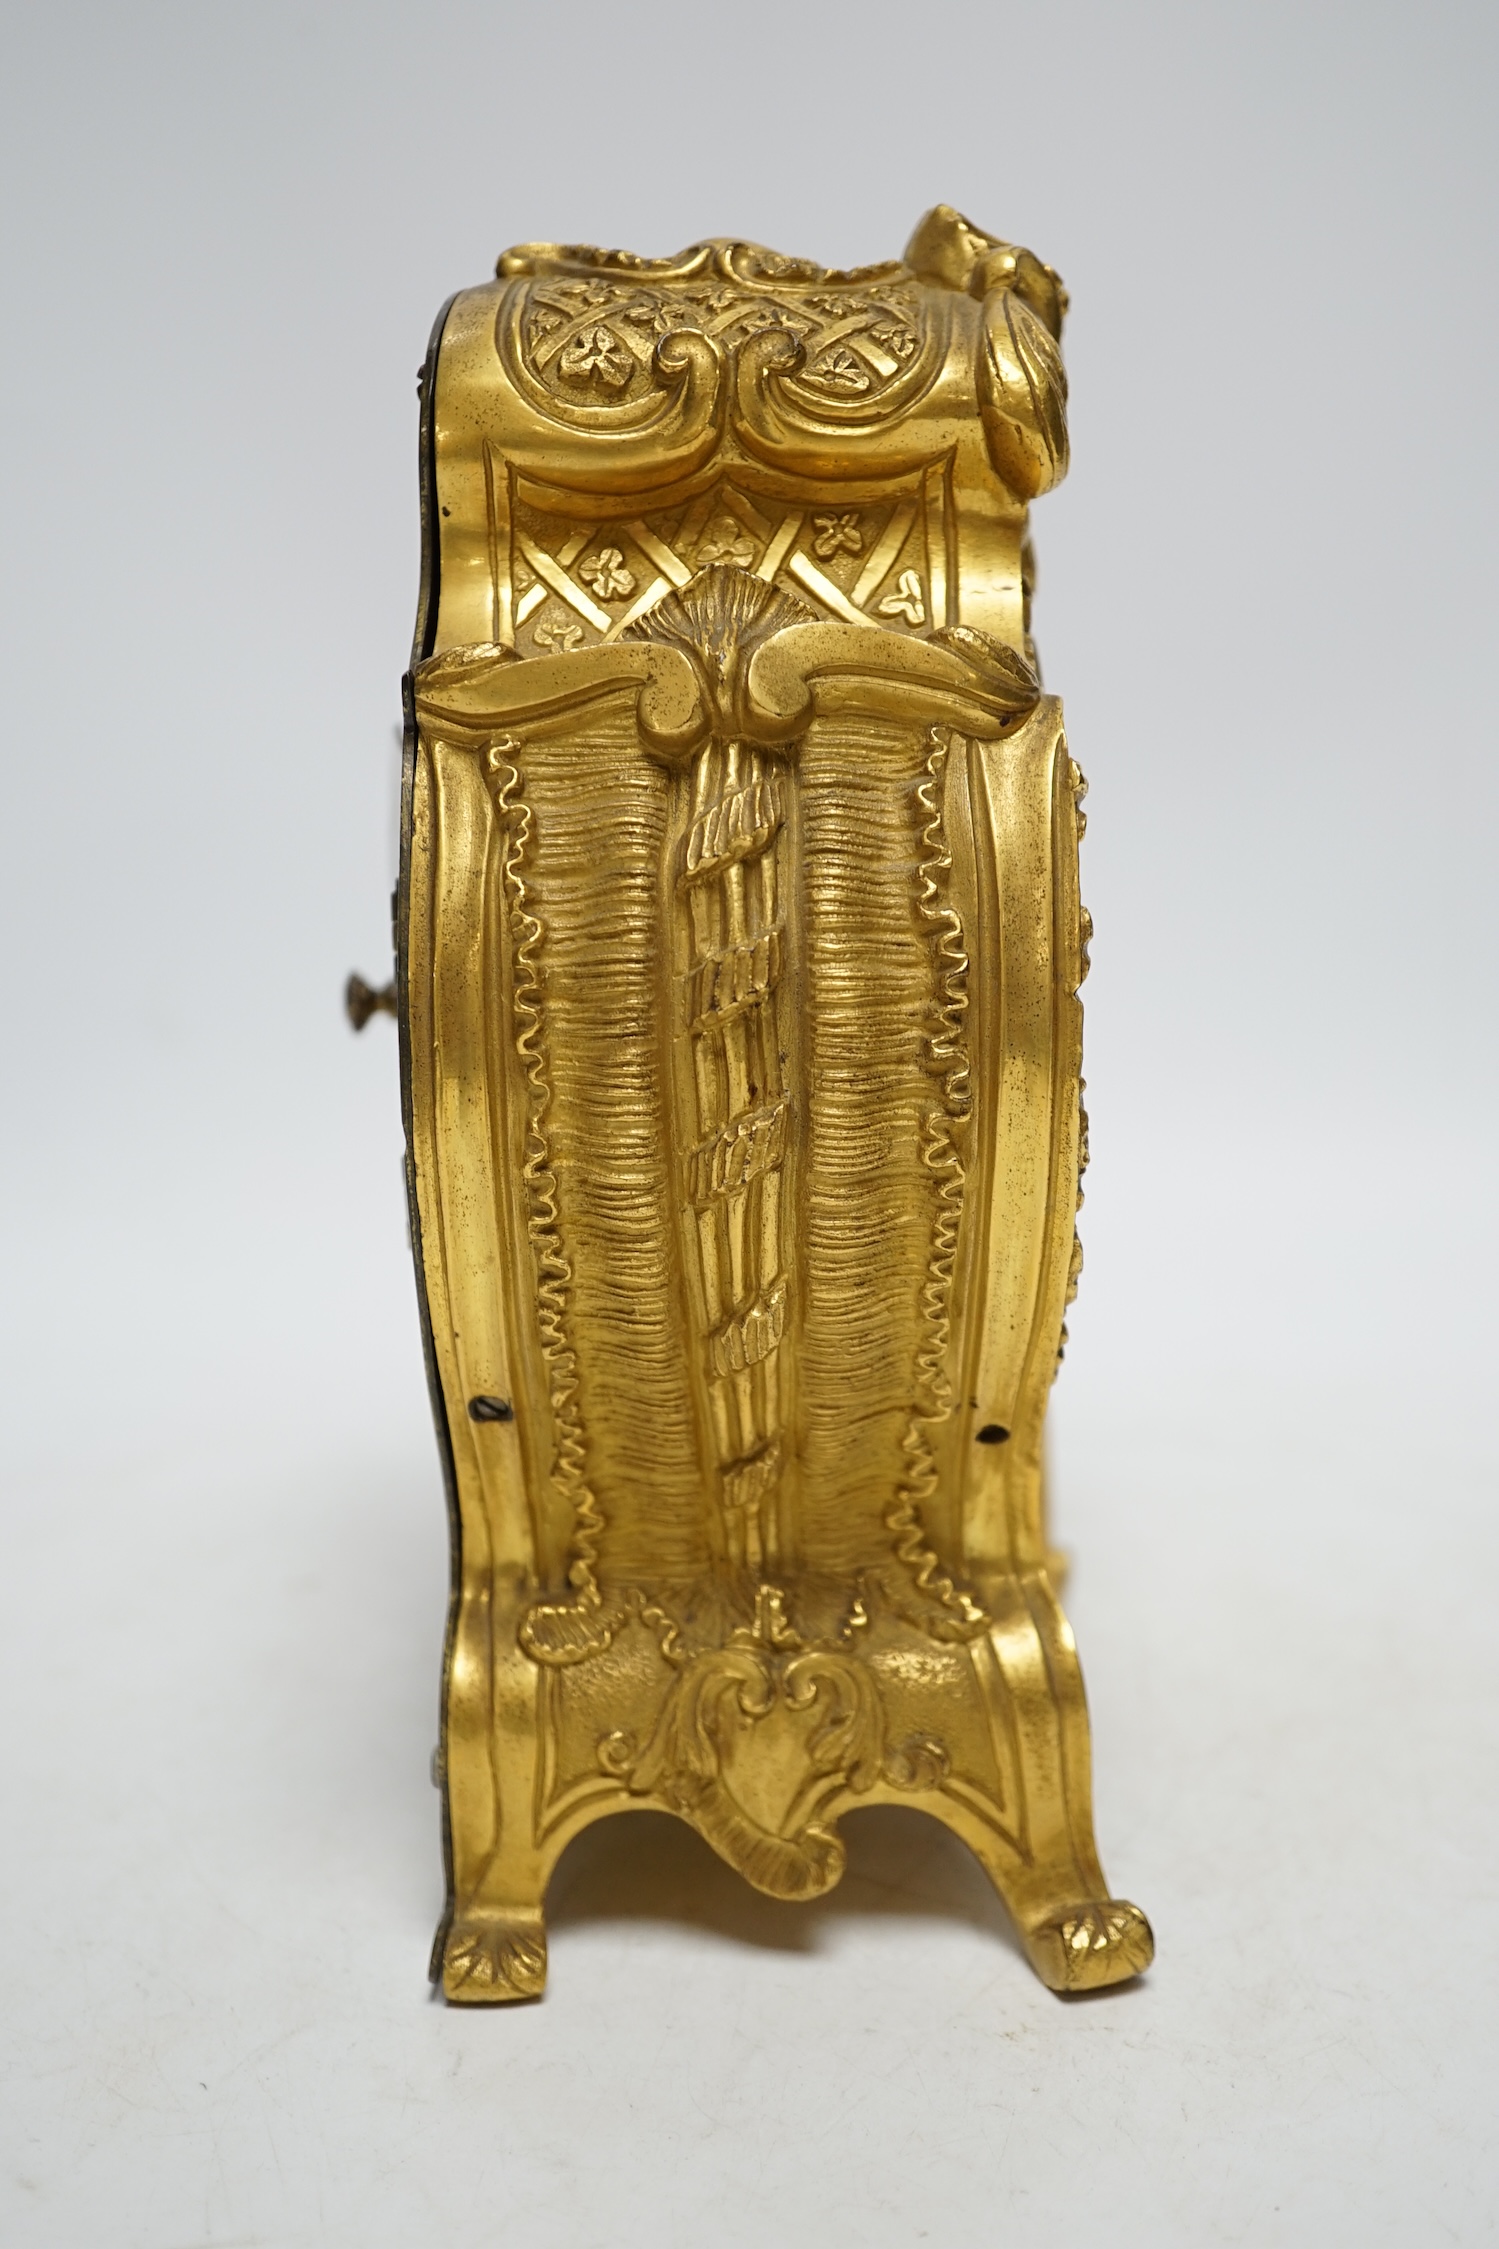 An English ormolu mantel clock, c.1835, Storr and Mortimer, New Bond St, pendulum, no key, 21cm